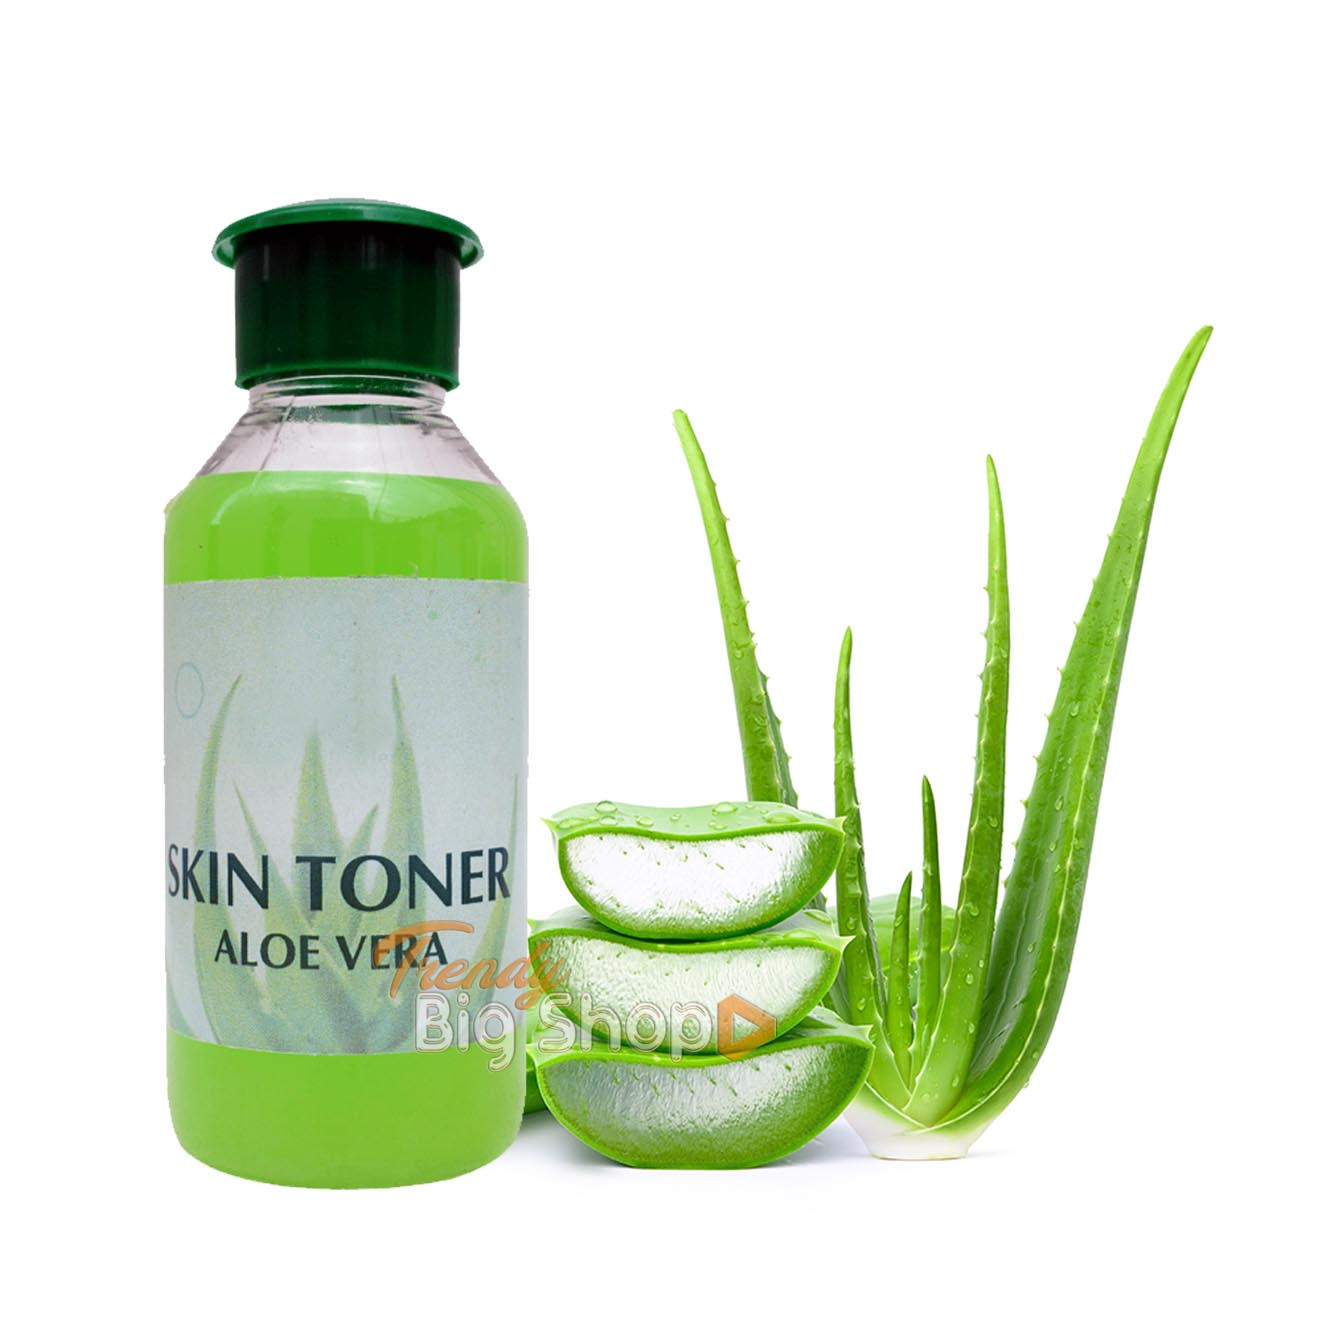 Aloevera Rose Skin Toner, Organic Aloe vera Skin Toner, 250ml